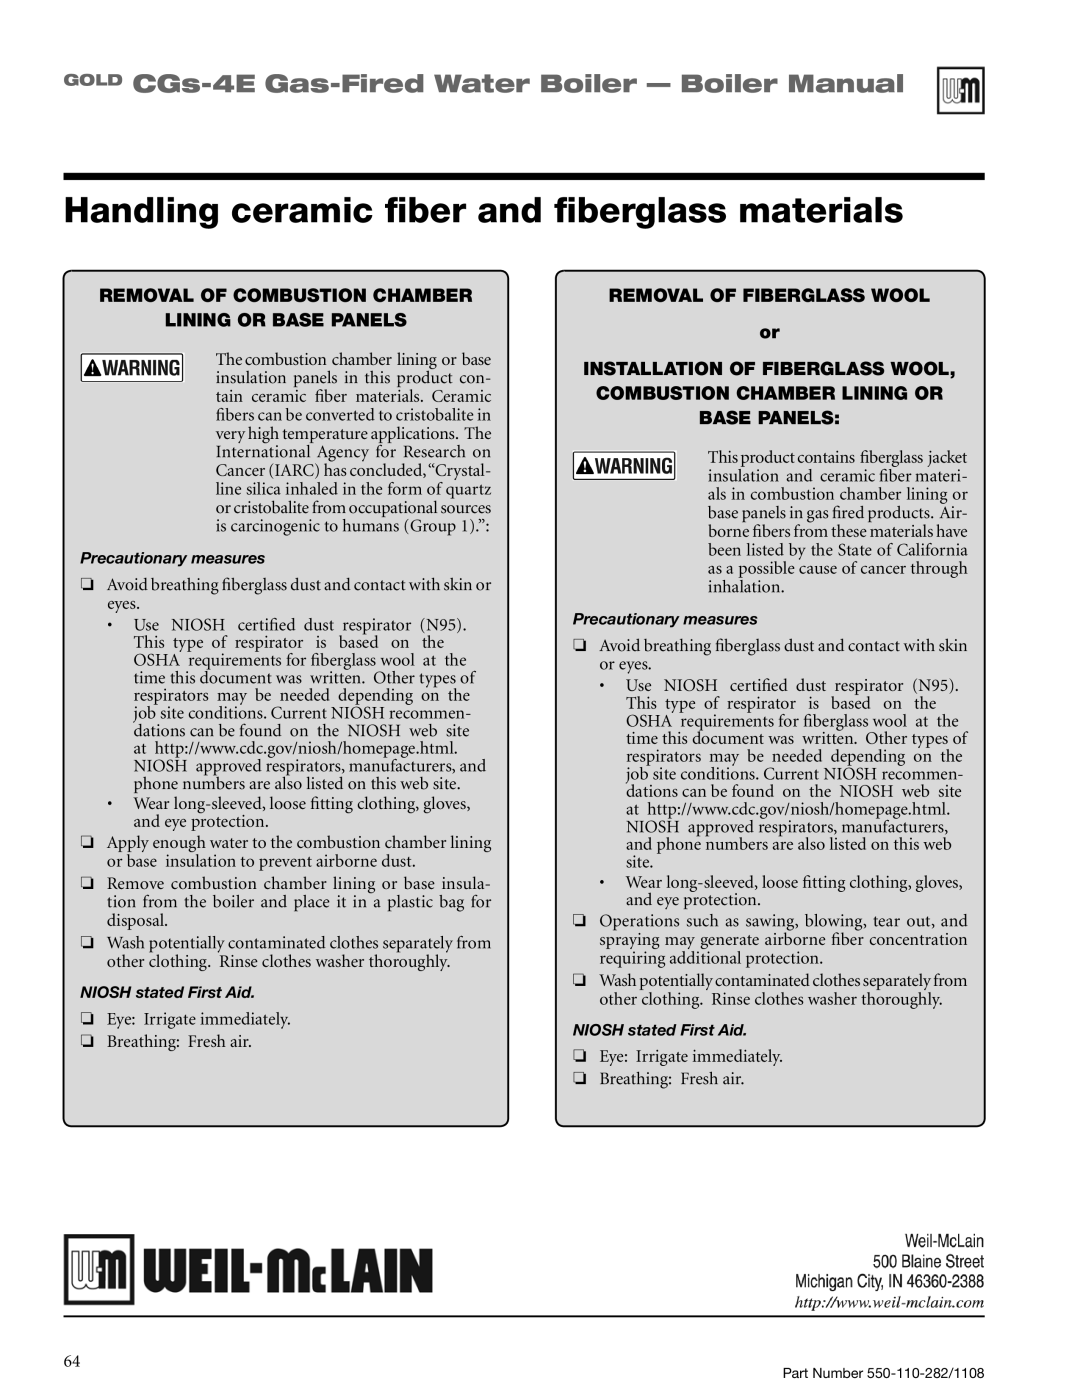 Weil-McLain CGS-4E Handling ceramic fiber and fiberglass materials, GOLD CGs-4E Gas-FiredWater Boiler - Boiler Manual 